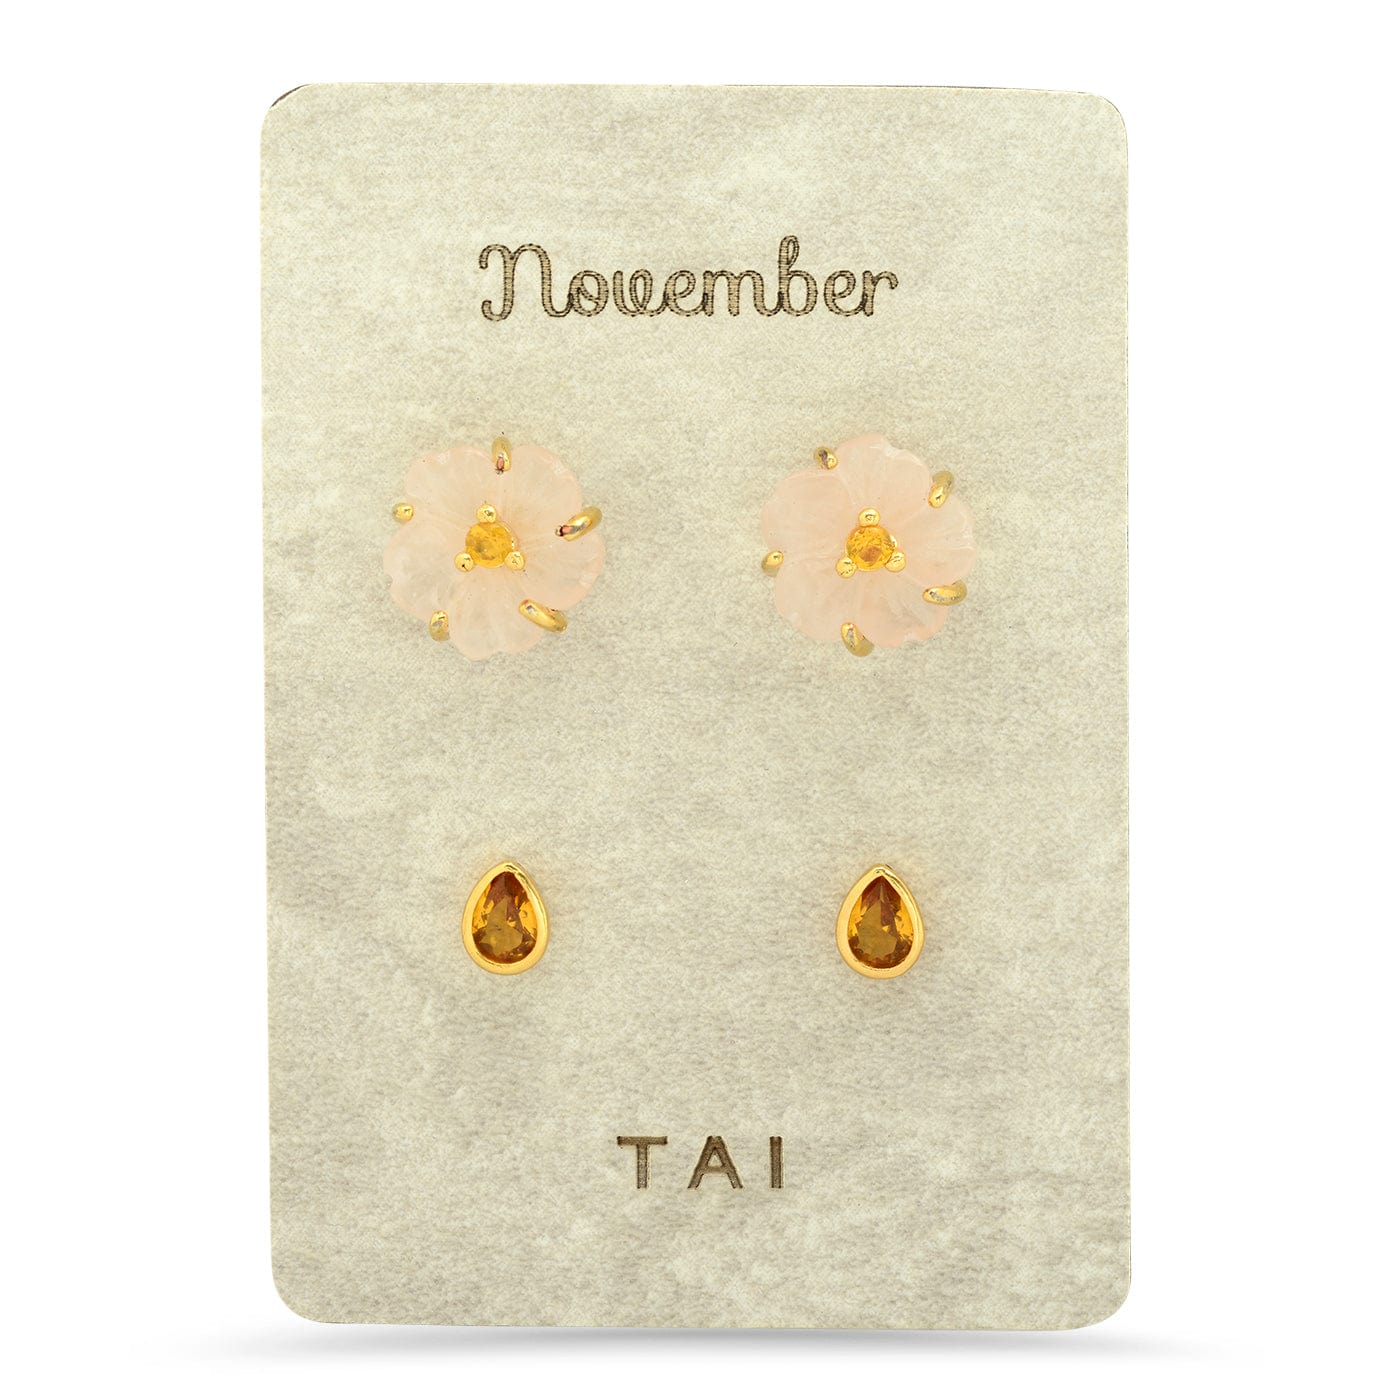 TAI JEWELRY Earrings November Rose Quartz Birthstone Earring Set